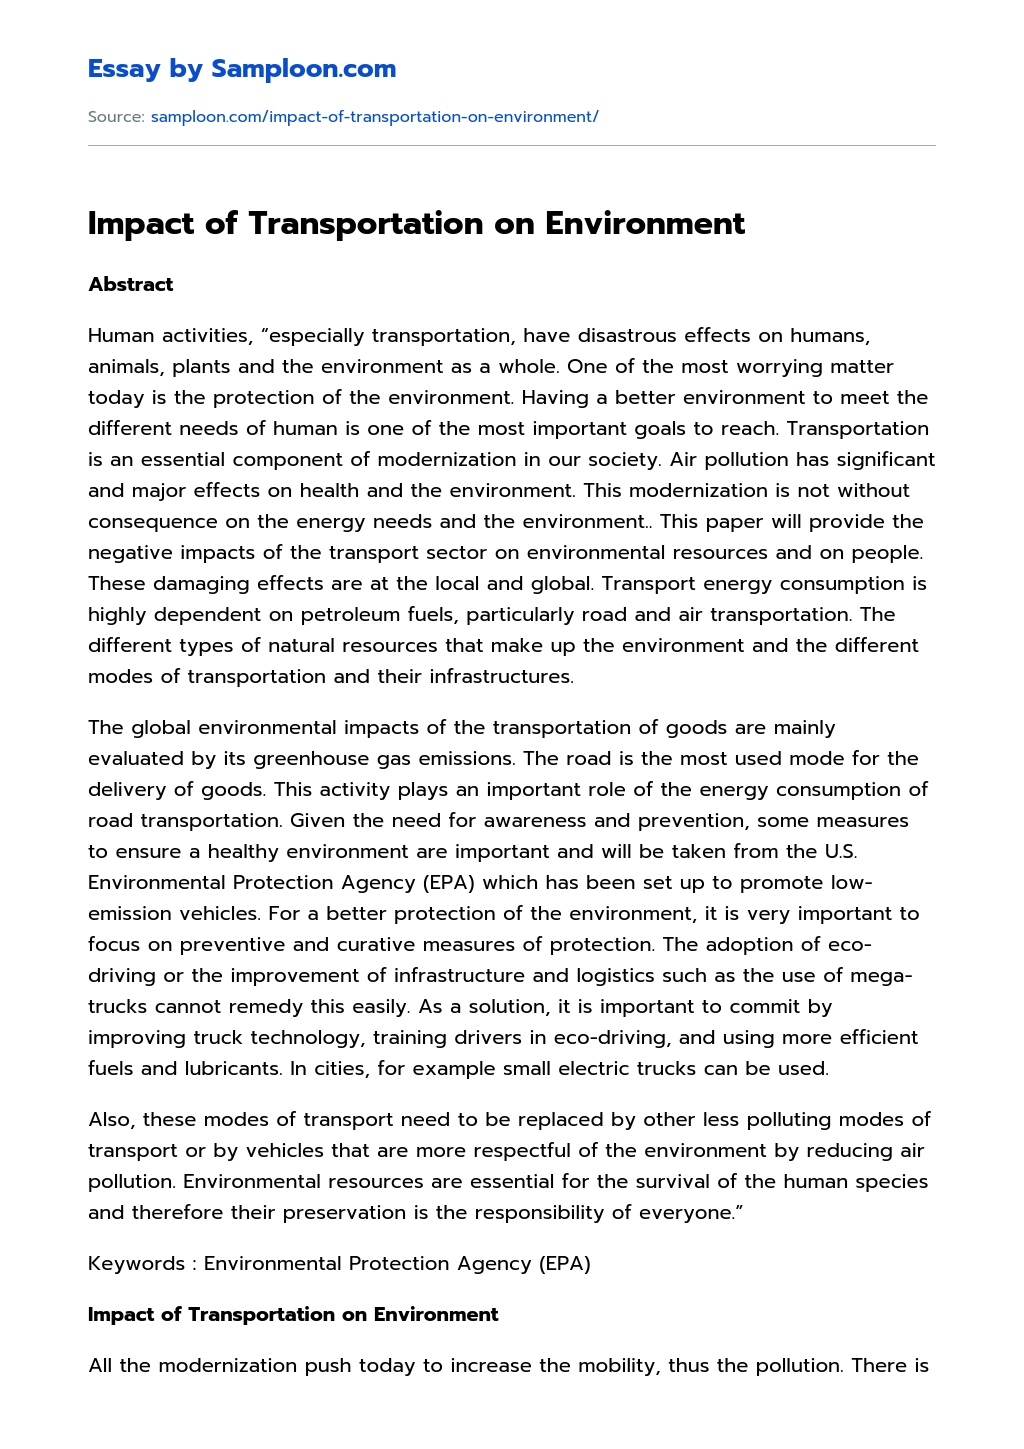 Impact of Transportation on Environment essay